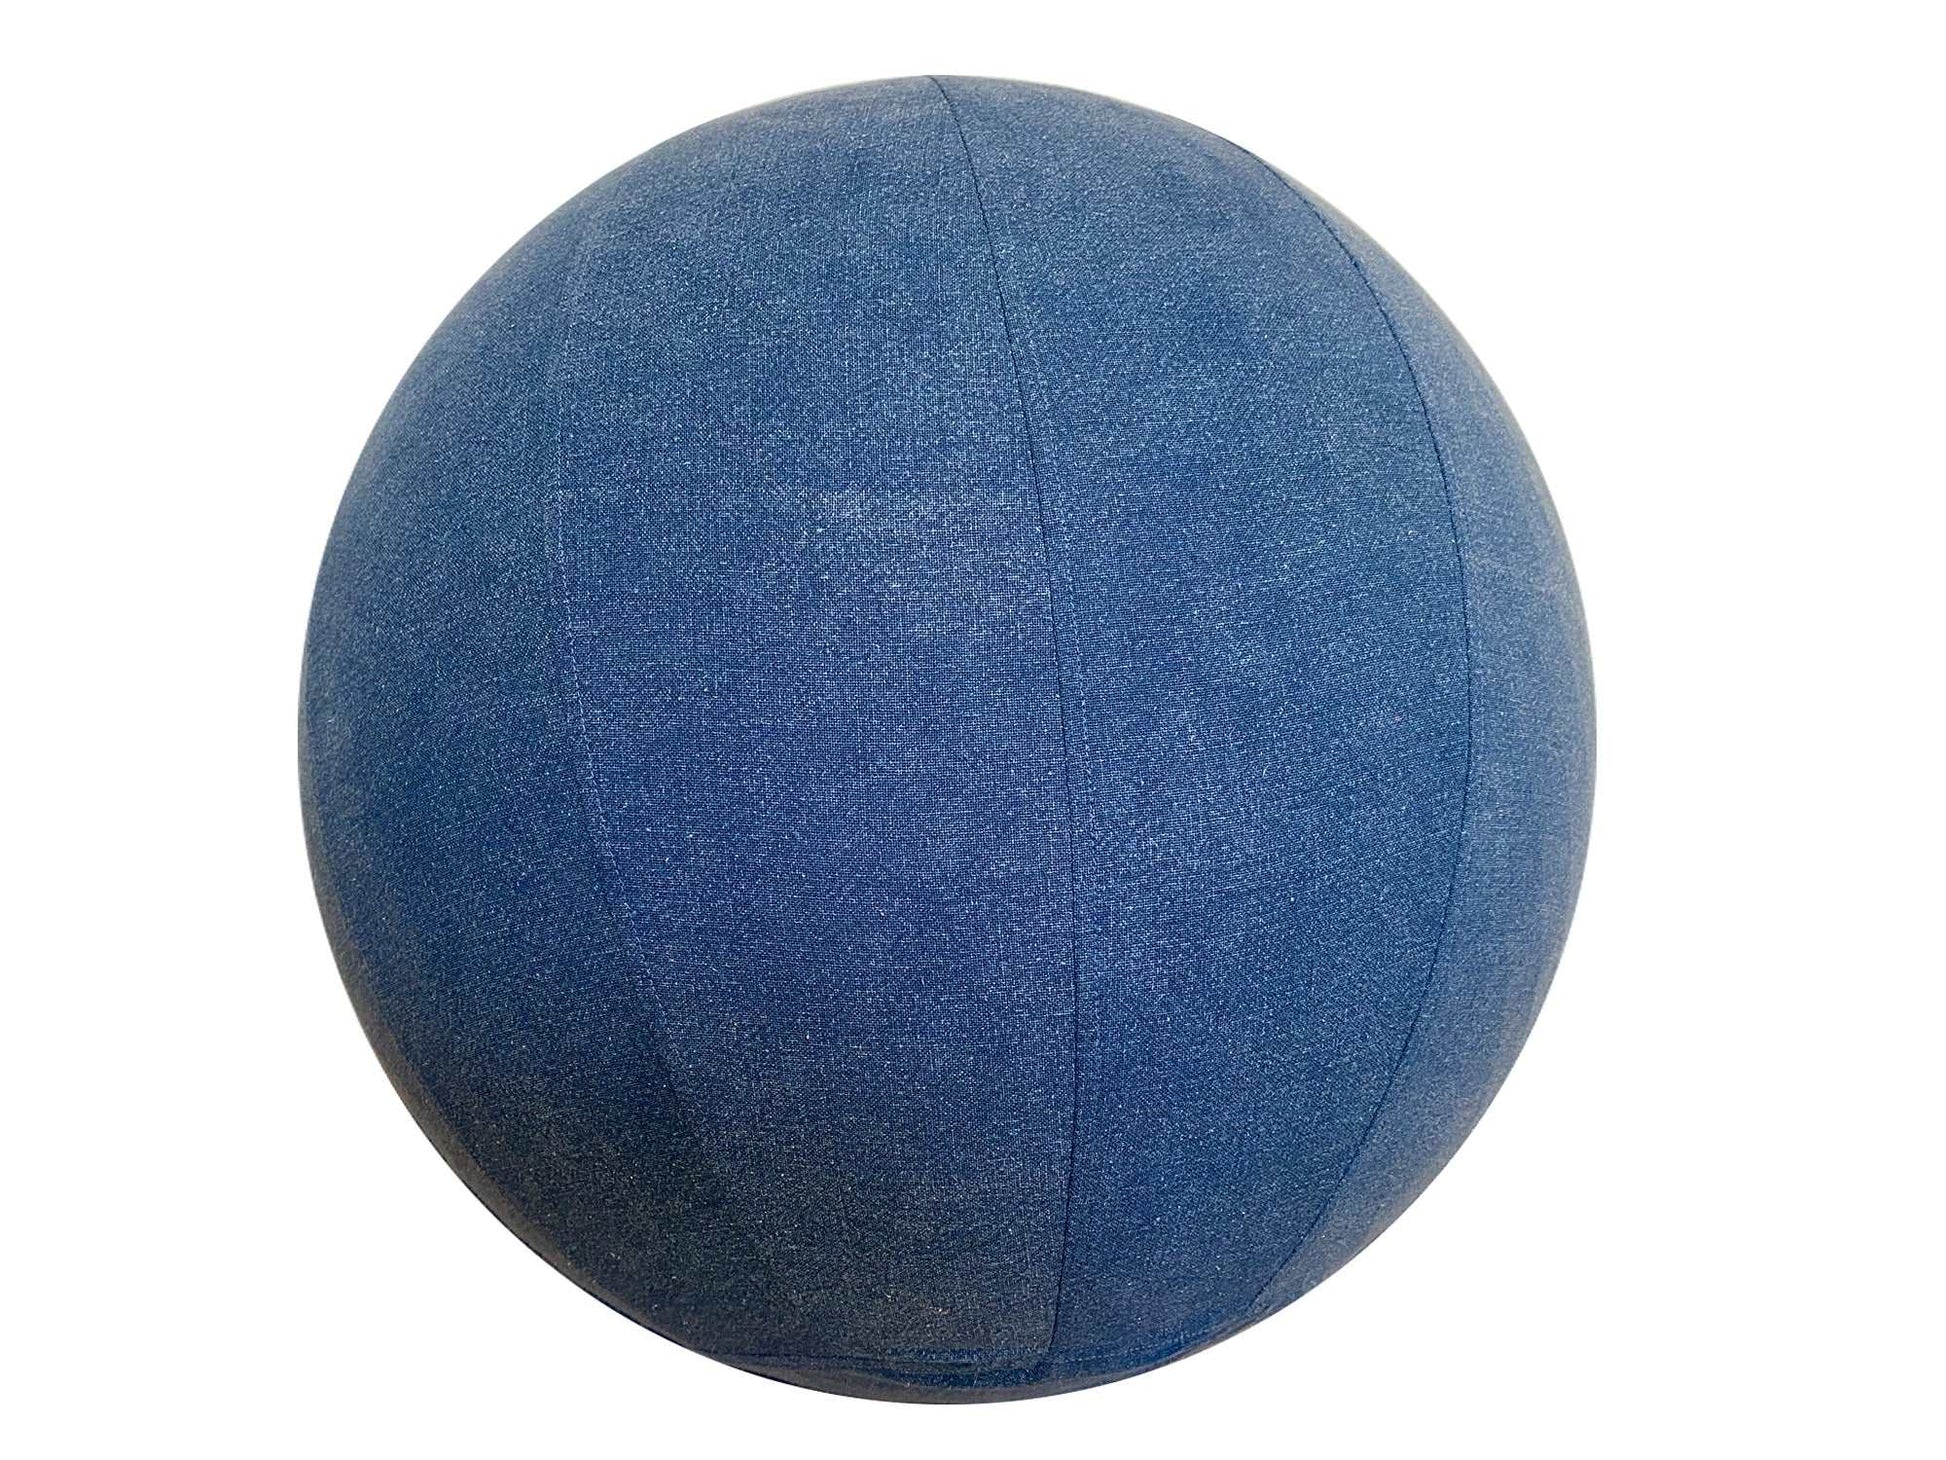 75cm Balance Ball / Yoga Ball Cover: Denim Stonewash